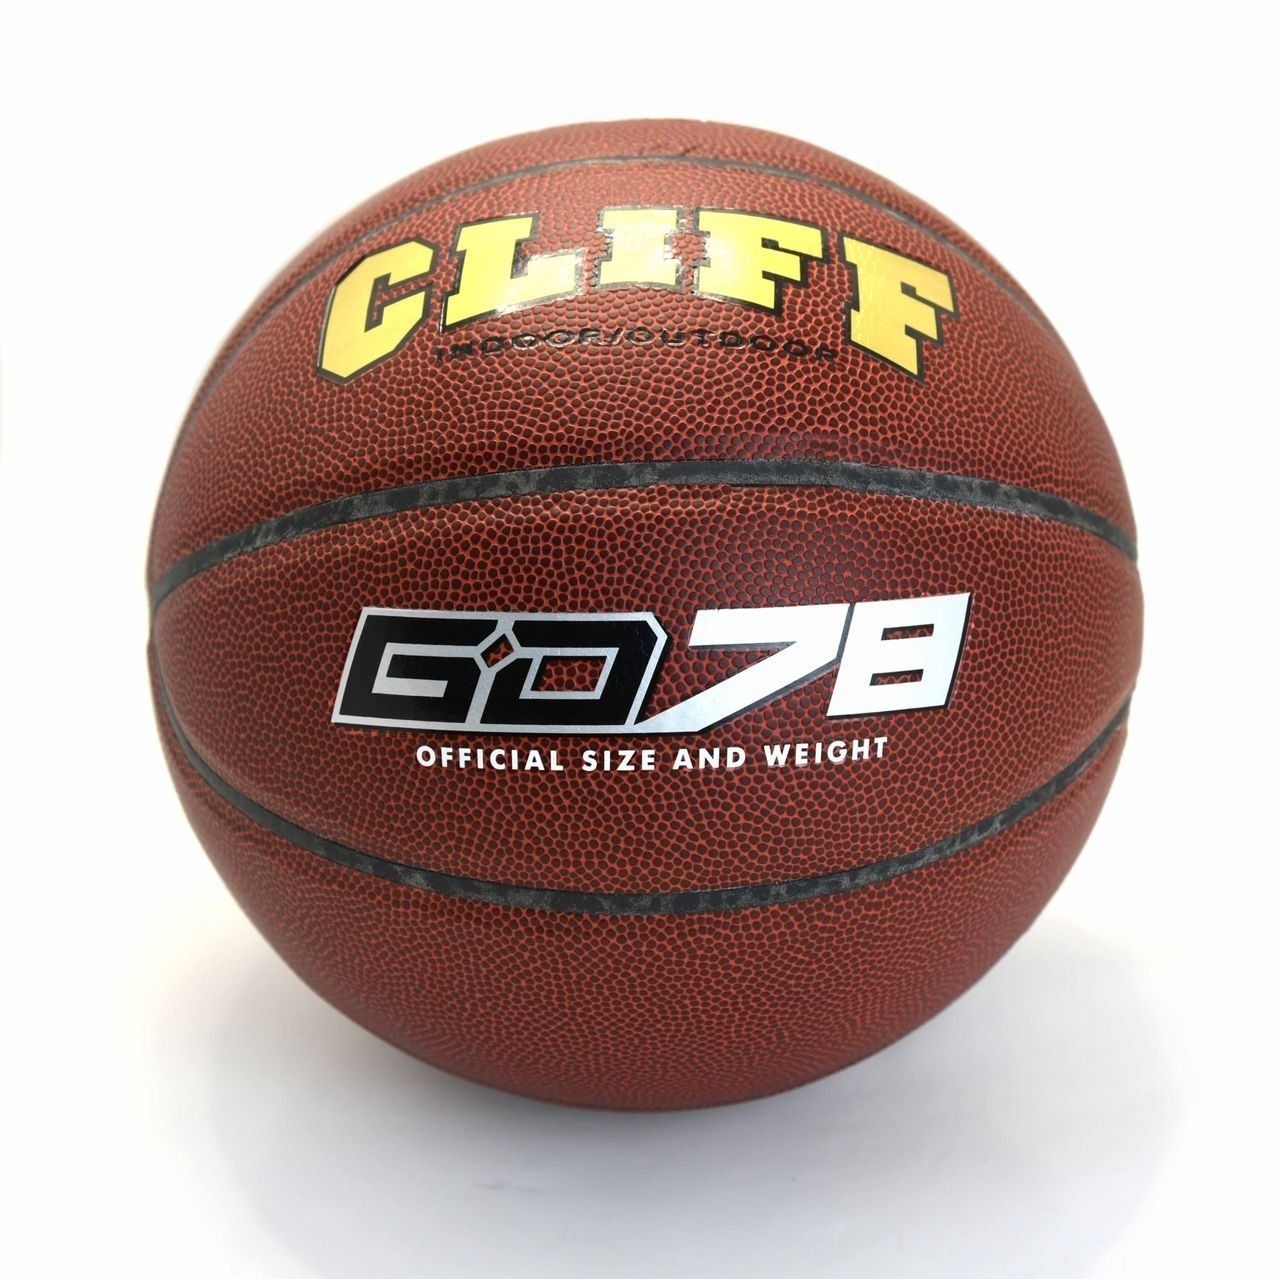 Мяч б/б Cliff GD 78 № 7